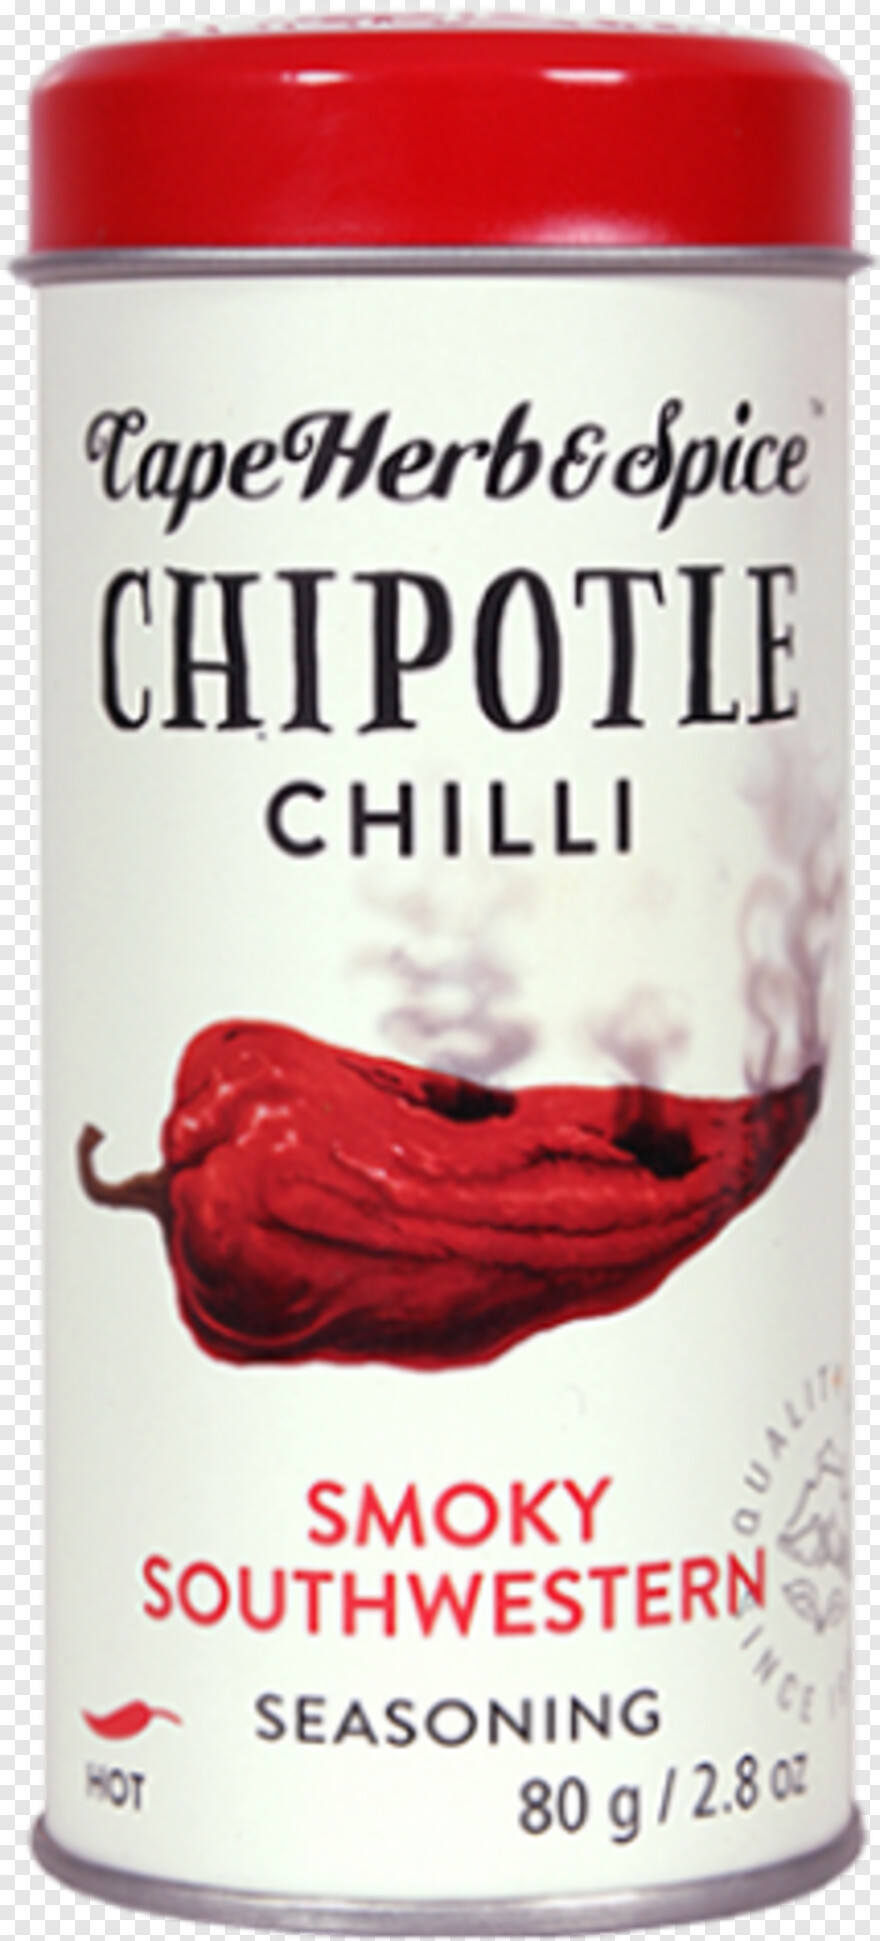 chipotle-logo # 523336